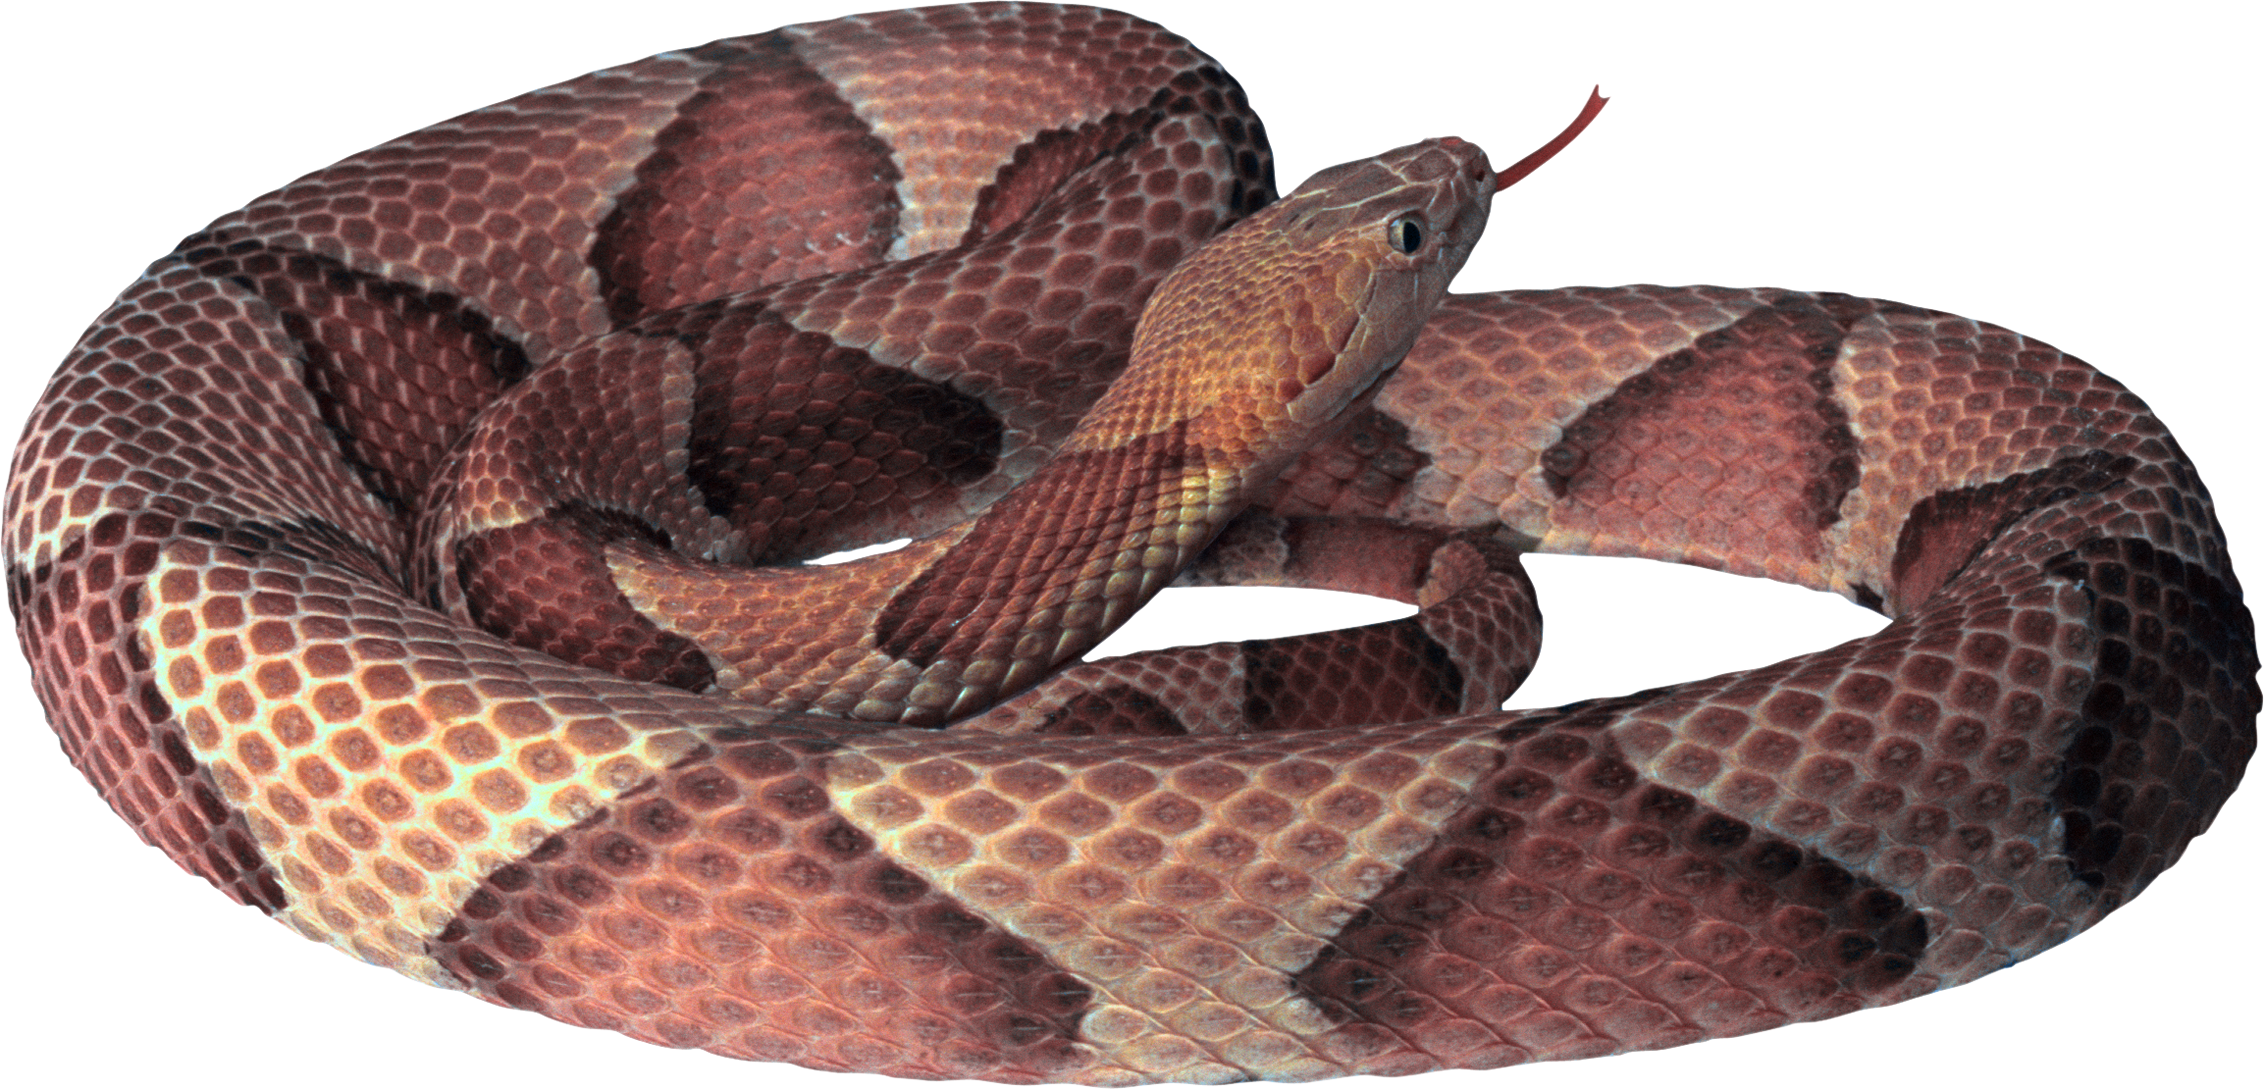 Diamondback Snake Transparent Image